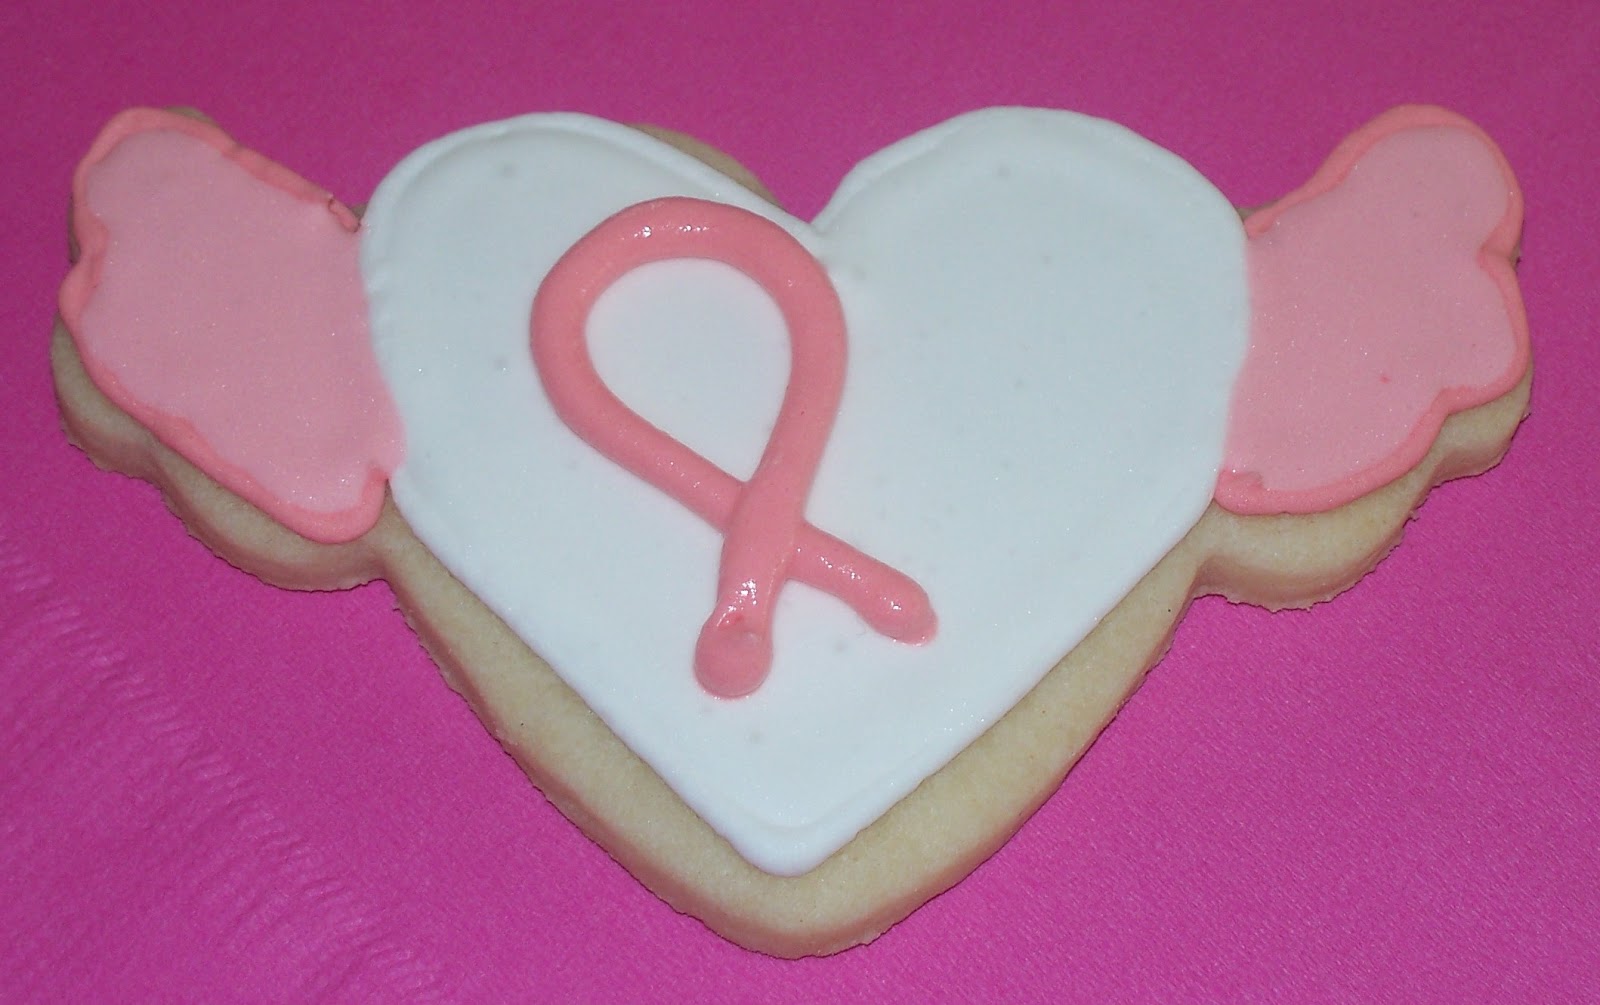 http://2.bp.blogspot.com/-vIVVcR1xT4w/UHcvkRUjOfI/AAAAAAAAAsc/R0JMI4MGpKA/s1600/pink+ribbon+cookies.jpg